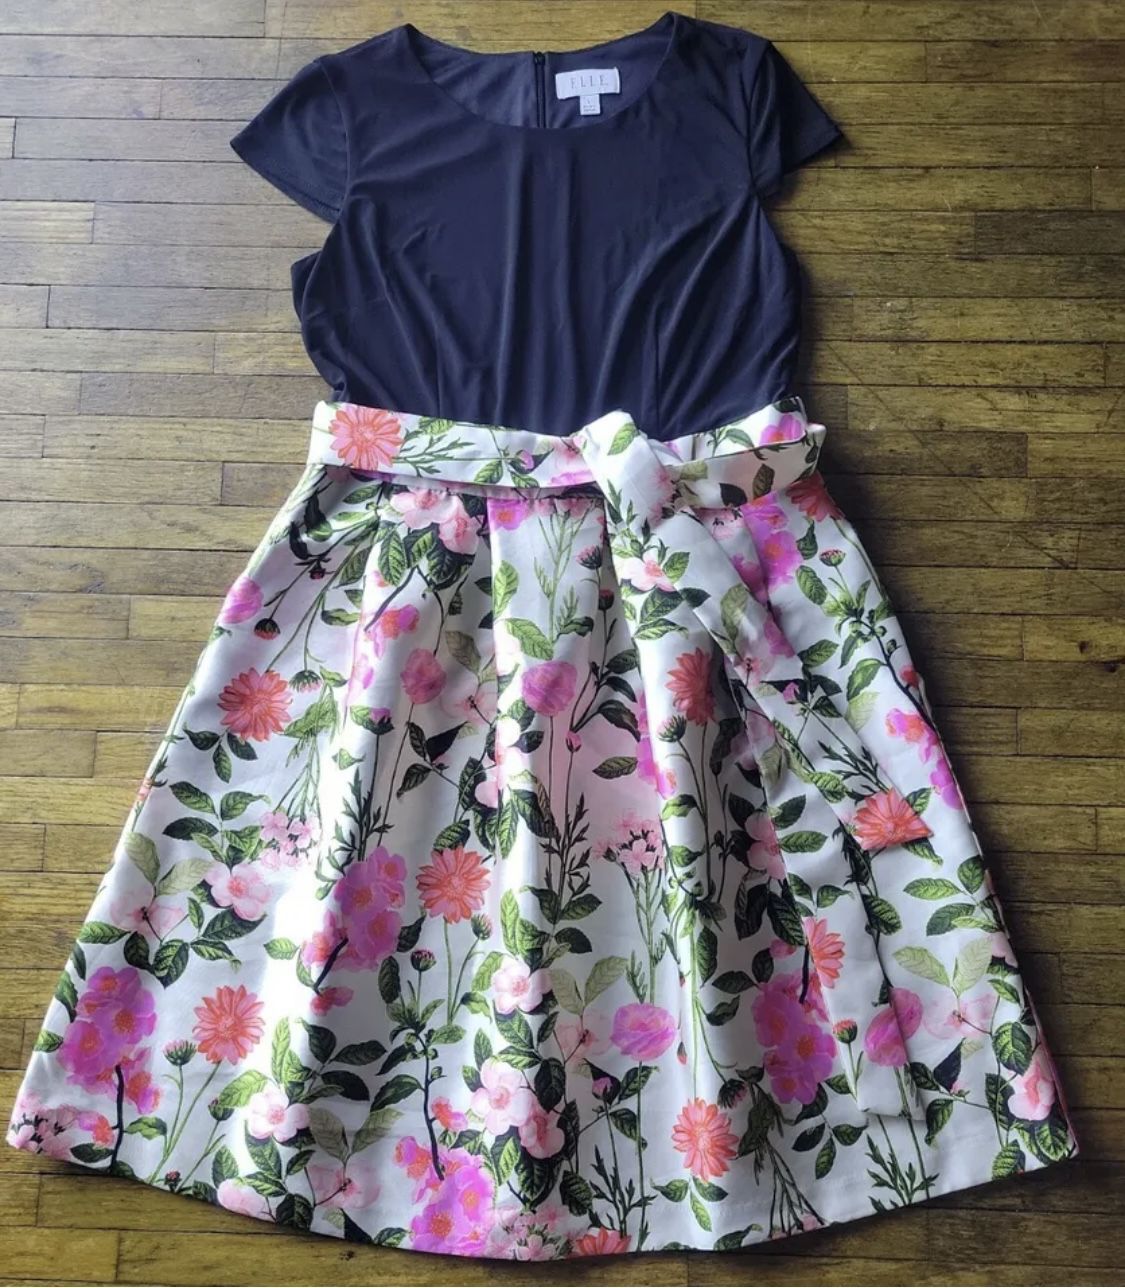 ELLE, Black Top & Floral Dress, Size L